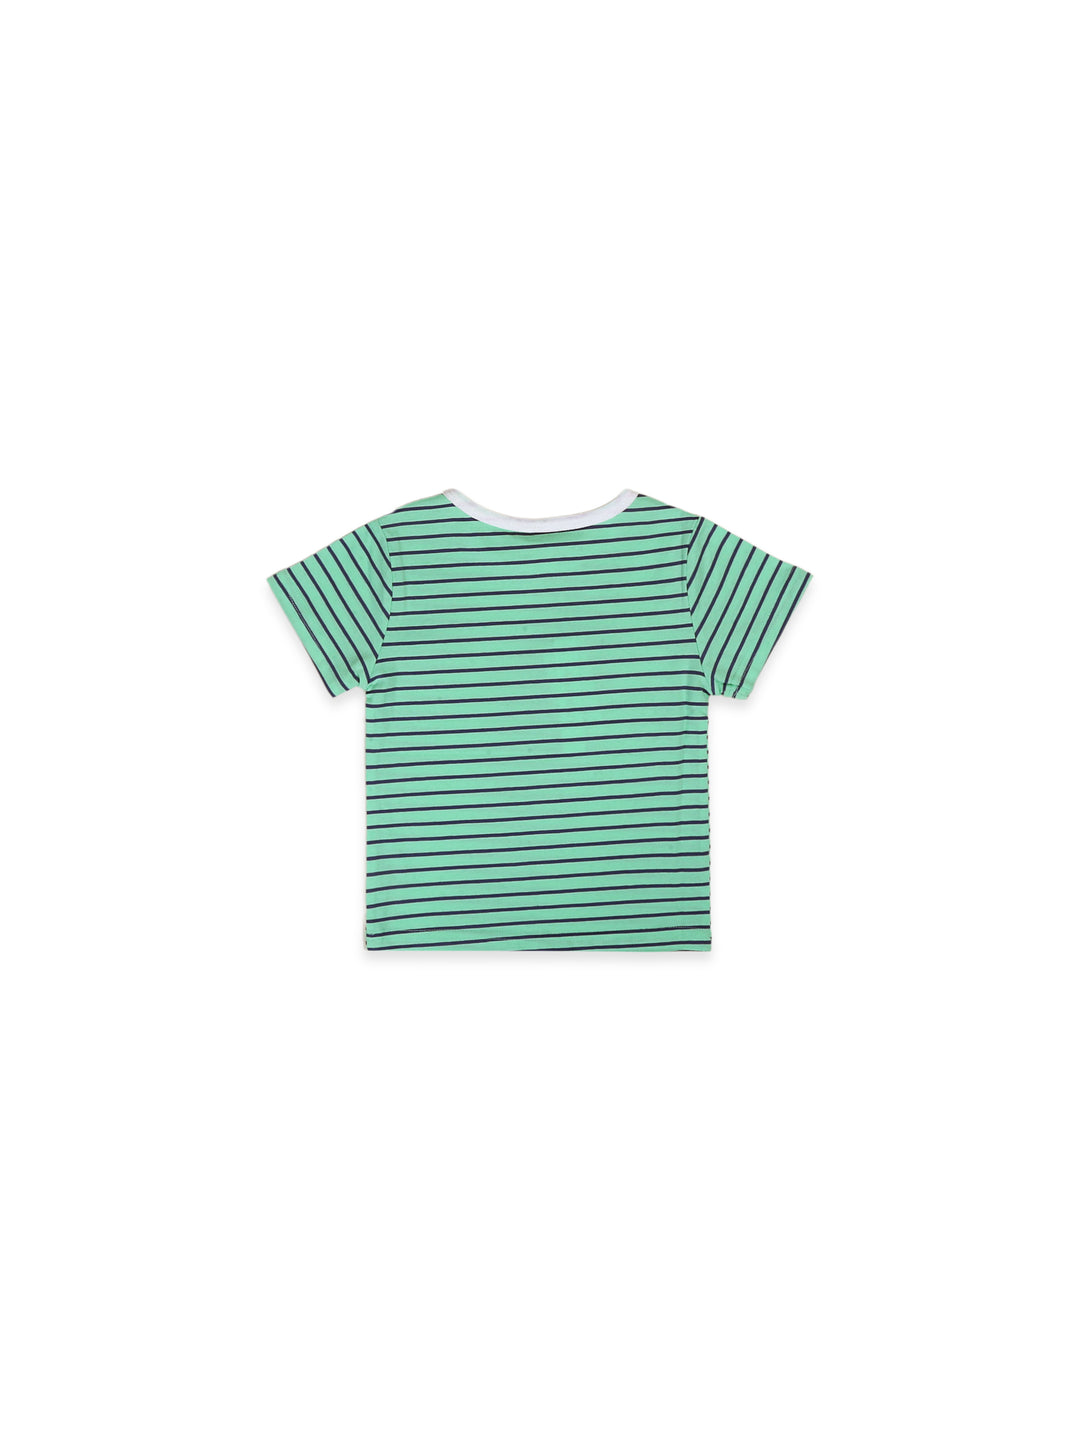 Imp Boys H/S Lining T-Shirt #D21059-24S (S-24)